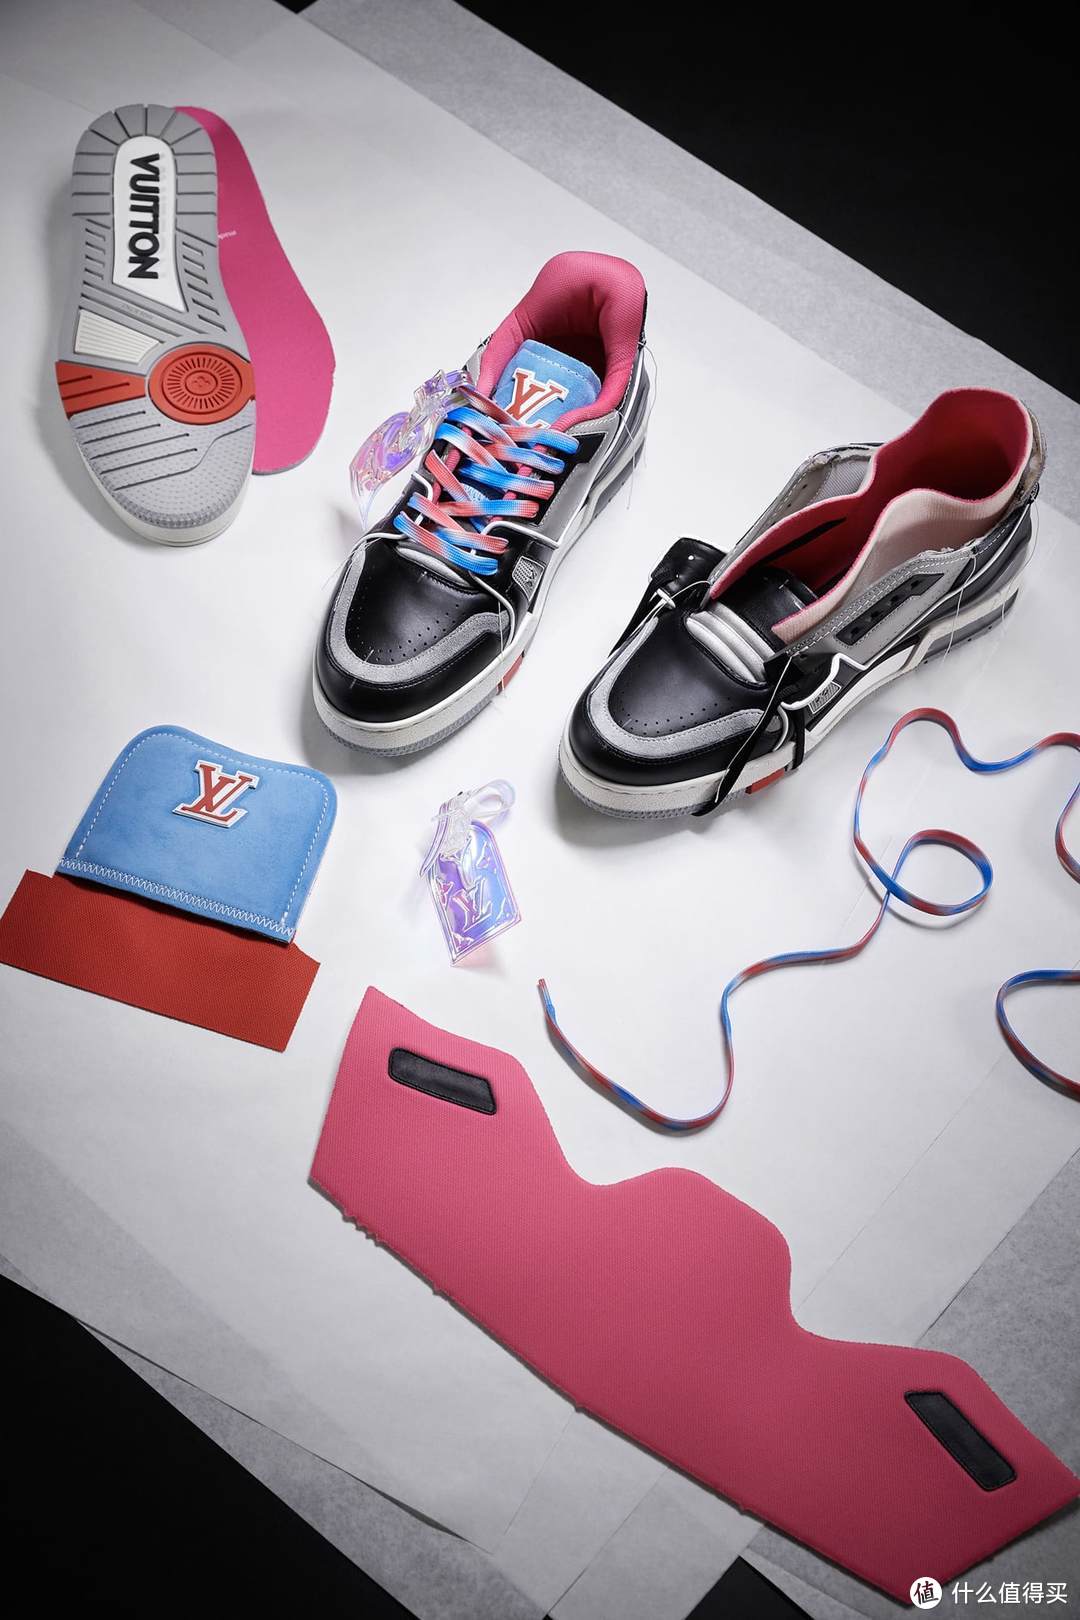 LOUIS VUITTON 发布 2021 春夏系列鞋款「Trainer Upcycling」，共有五种配色选择